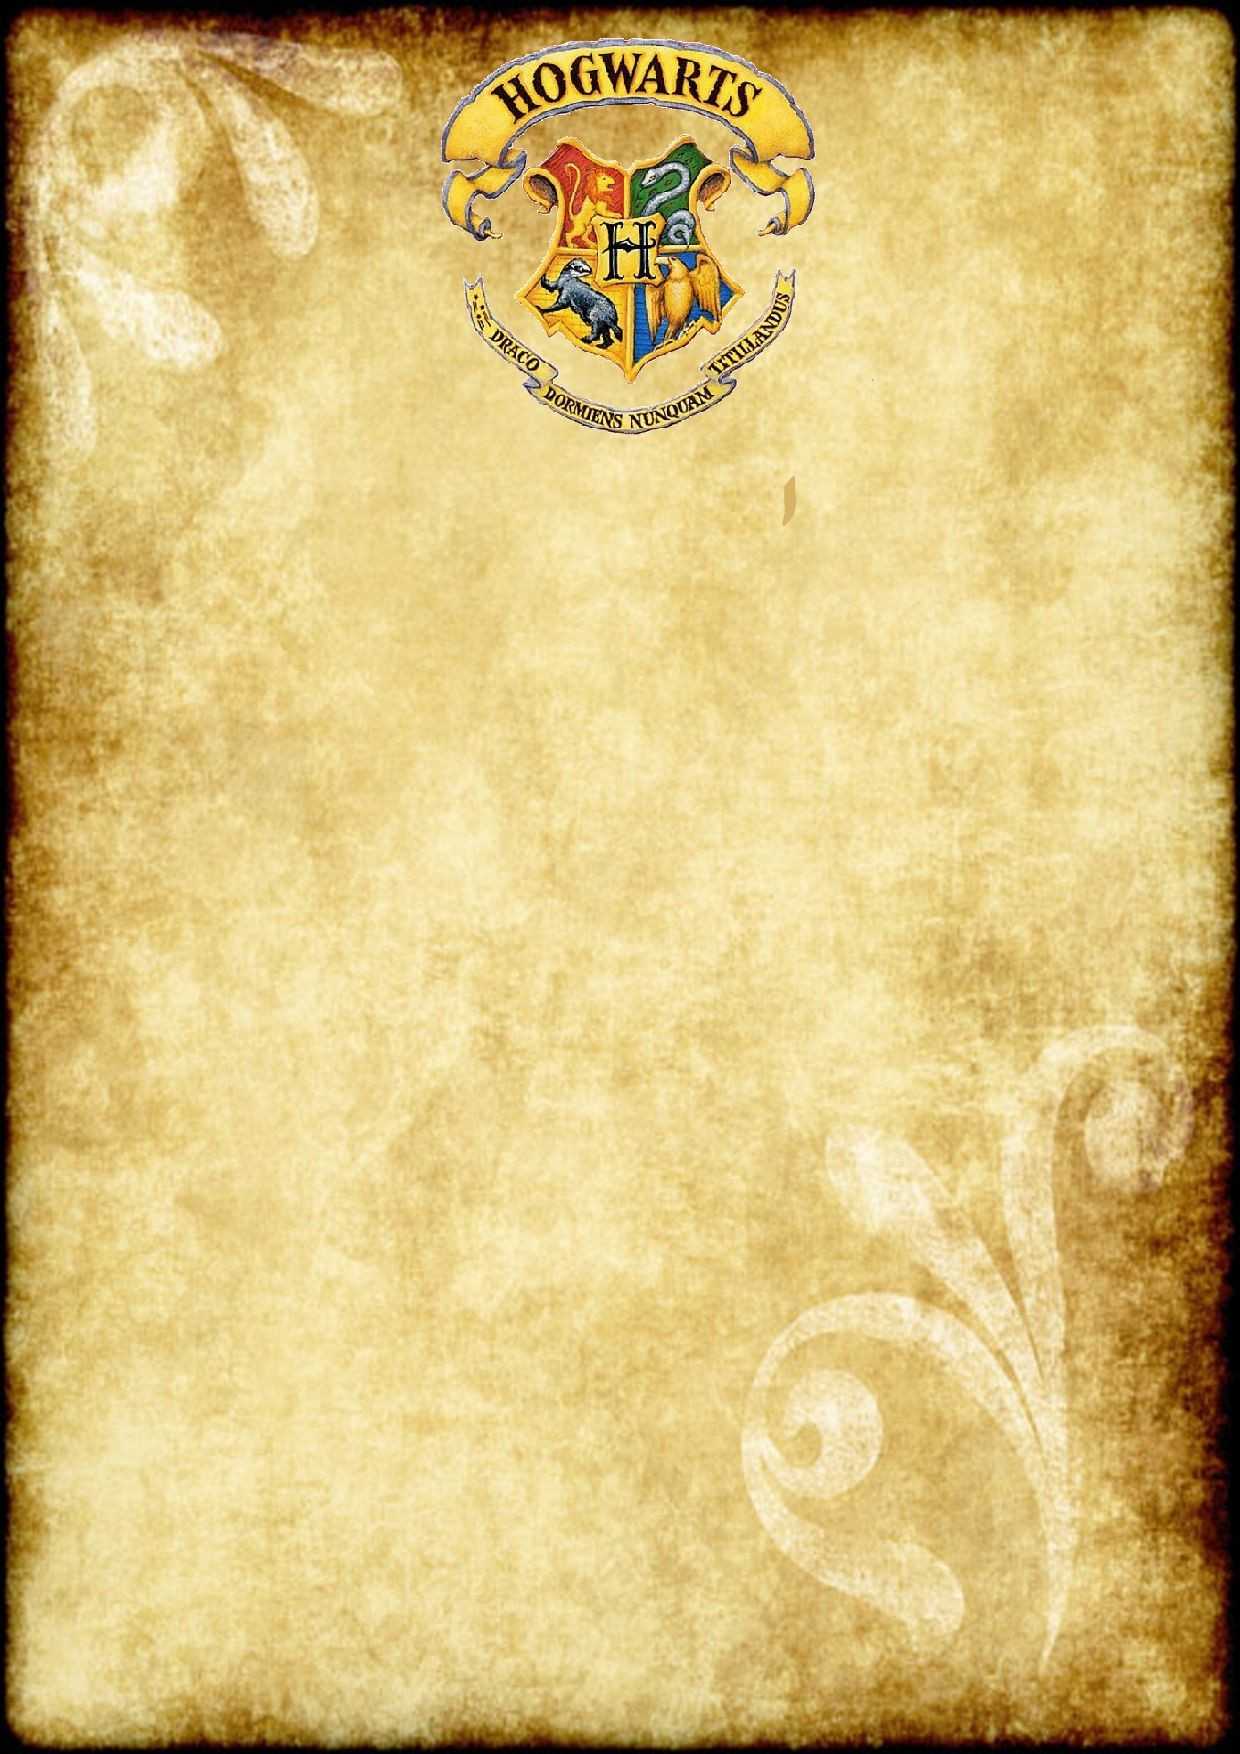 Hogwarts Certificate Template Free Printable Harry Potter Throughout Harry Potter Certificate Template